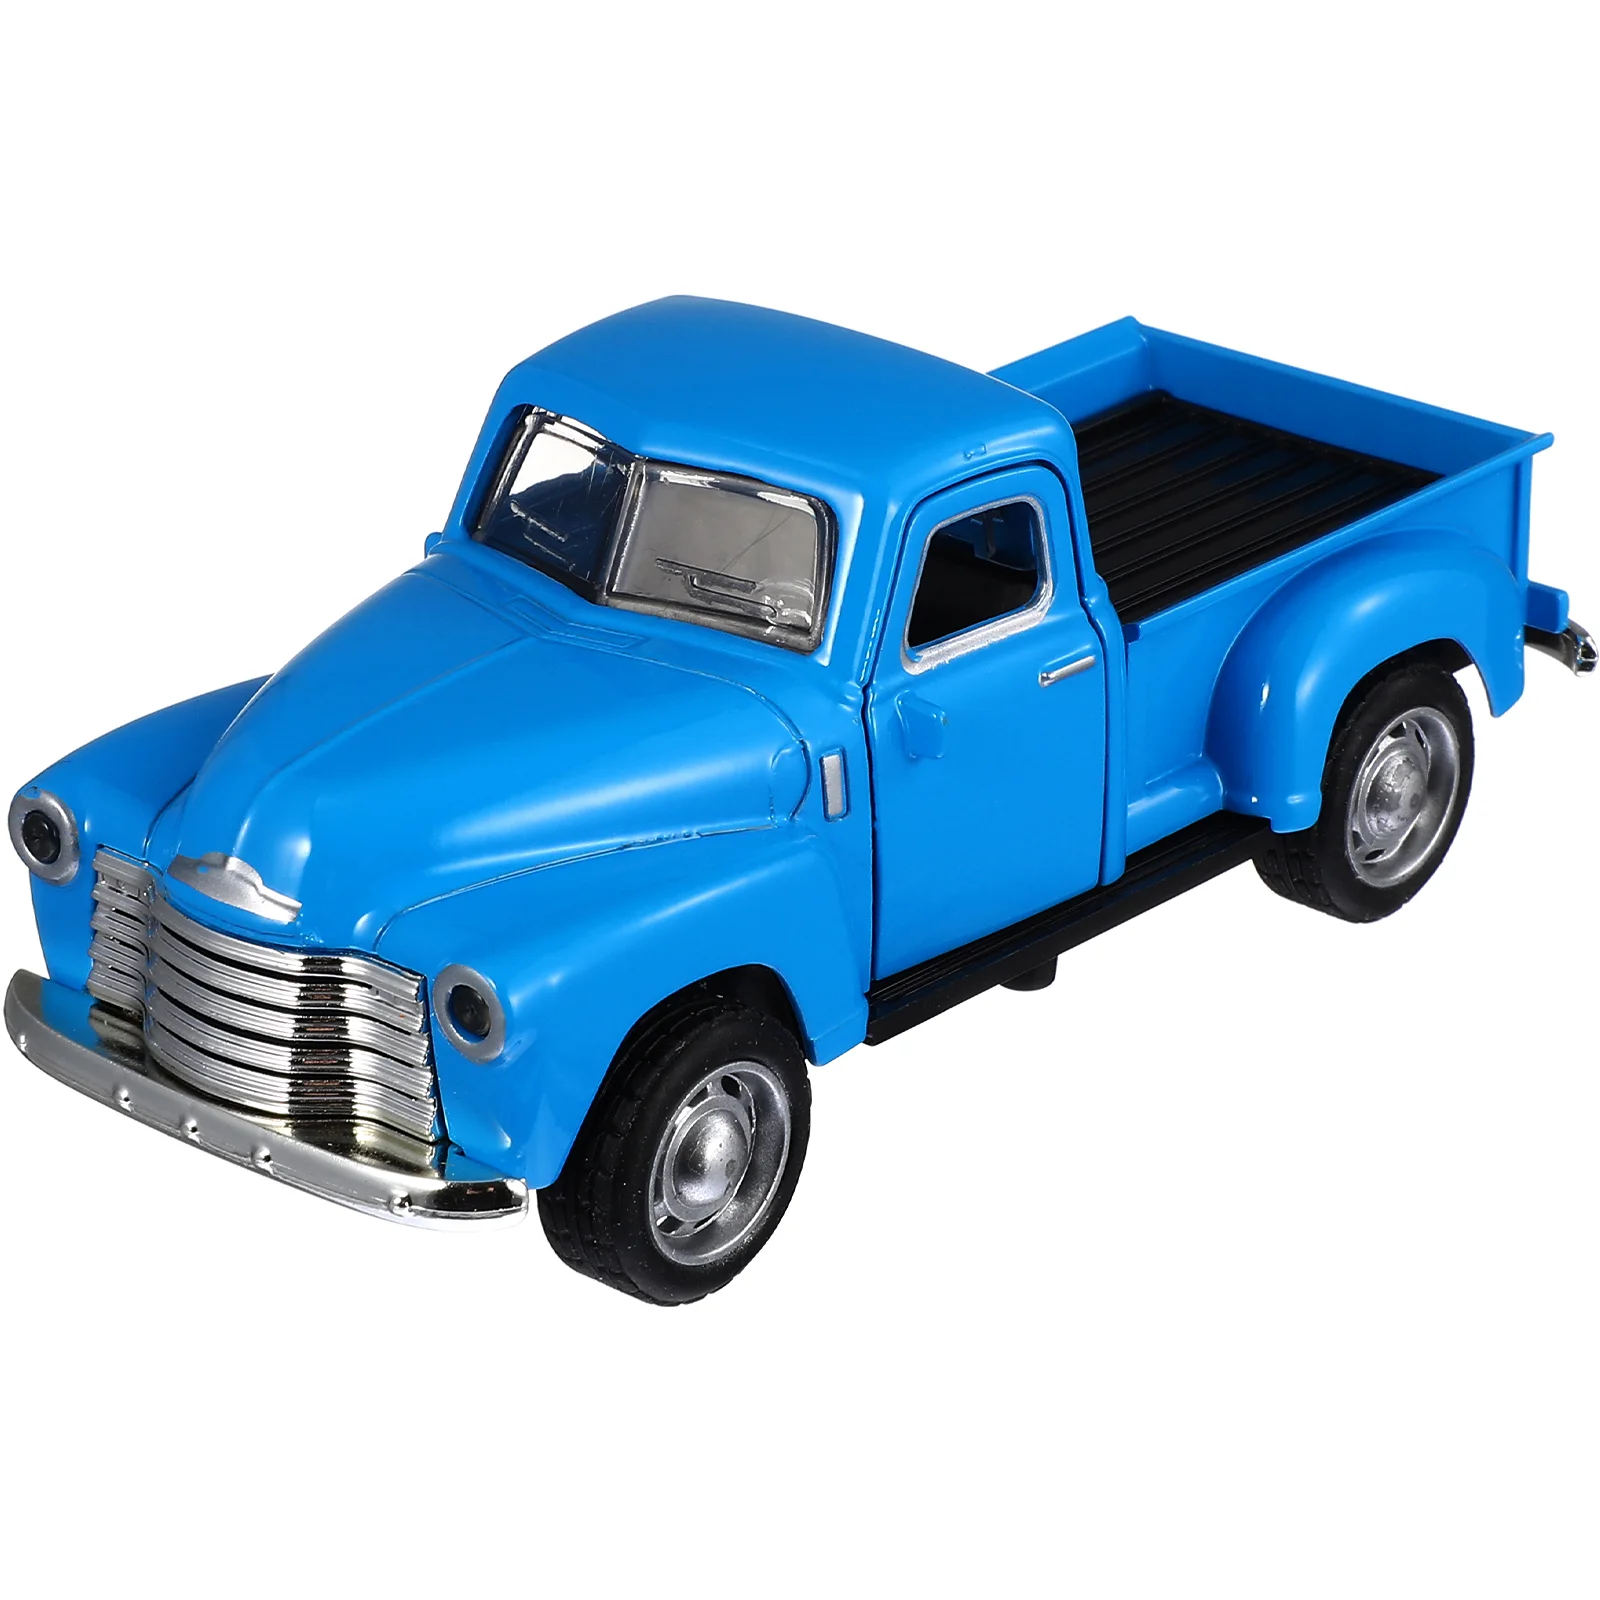 

Truck Toy Model Pickup Vintage Car Trucks Cars Die Cast Simulation Toys Vehicle Pick Metal Up Kids Retro Classic Old Little Blue